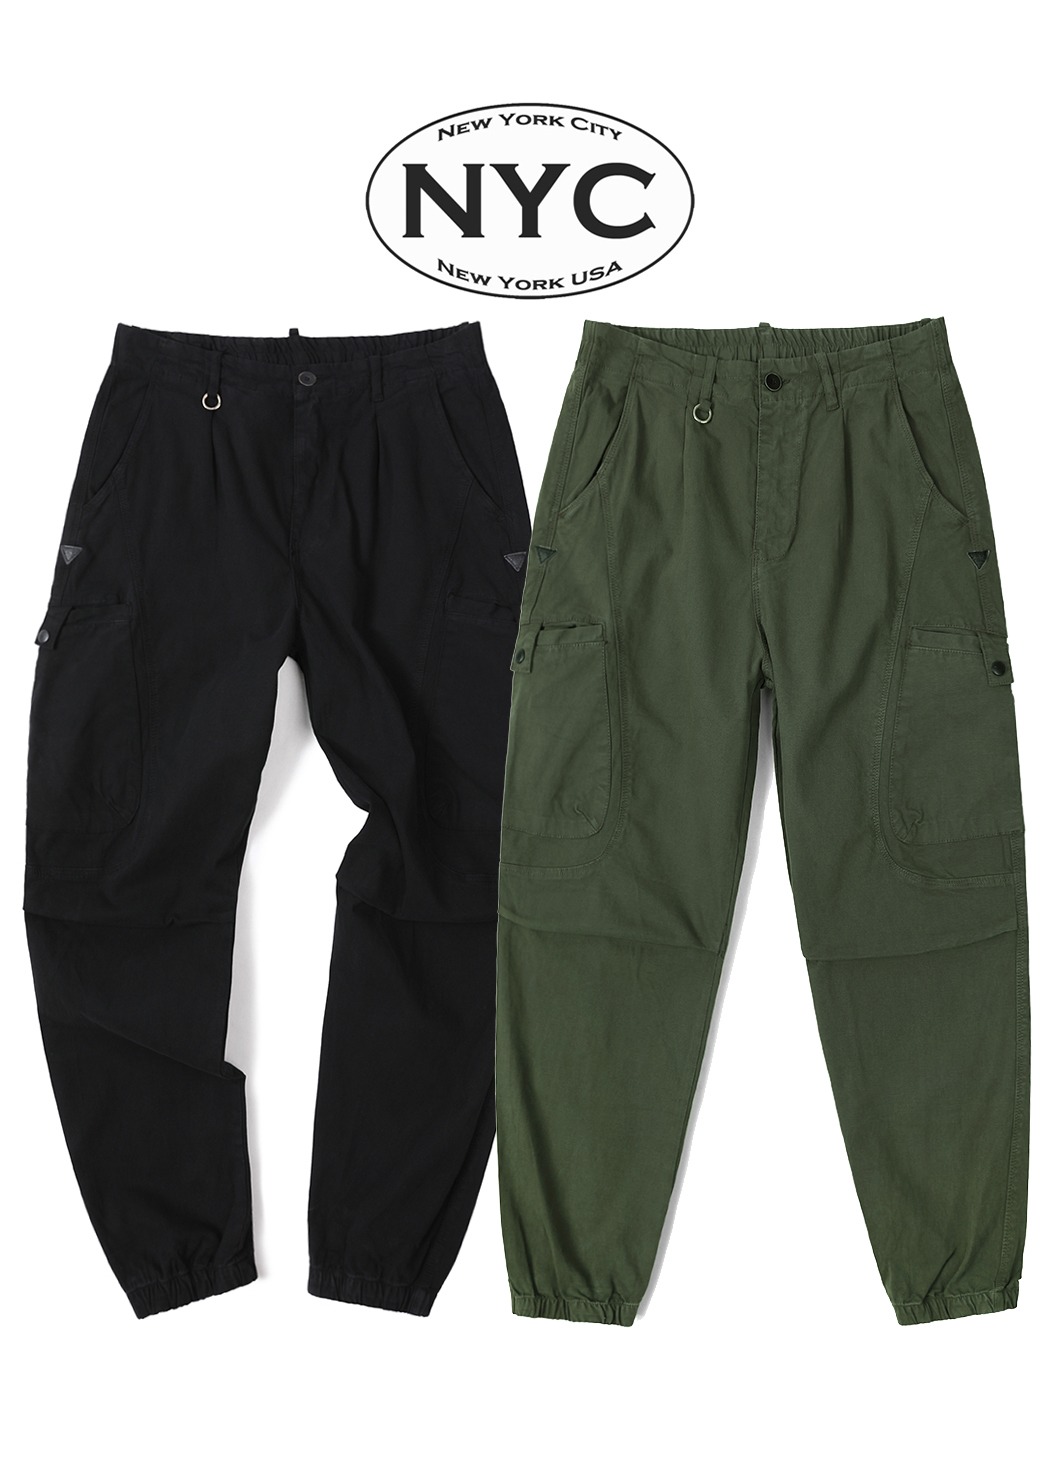 NYC Banding Cargo Pants -2color